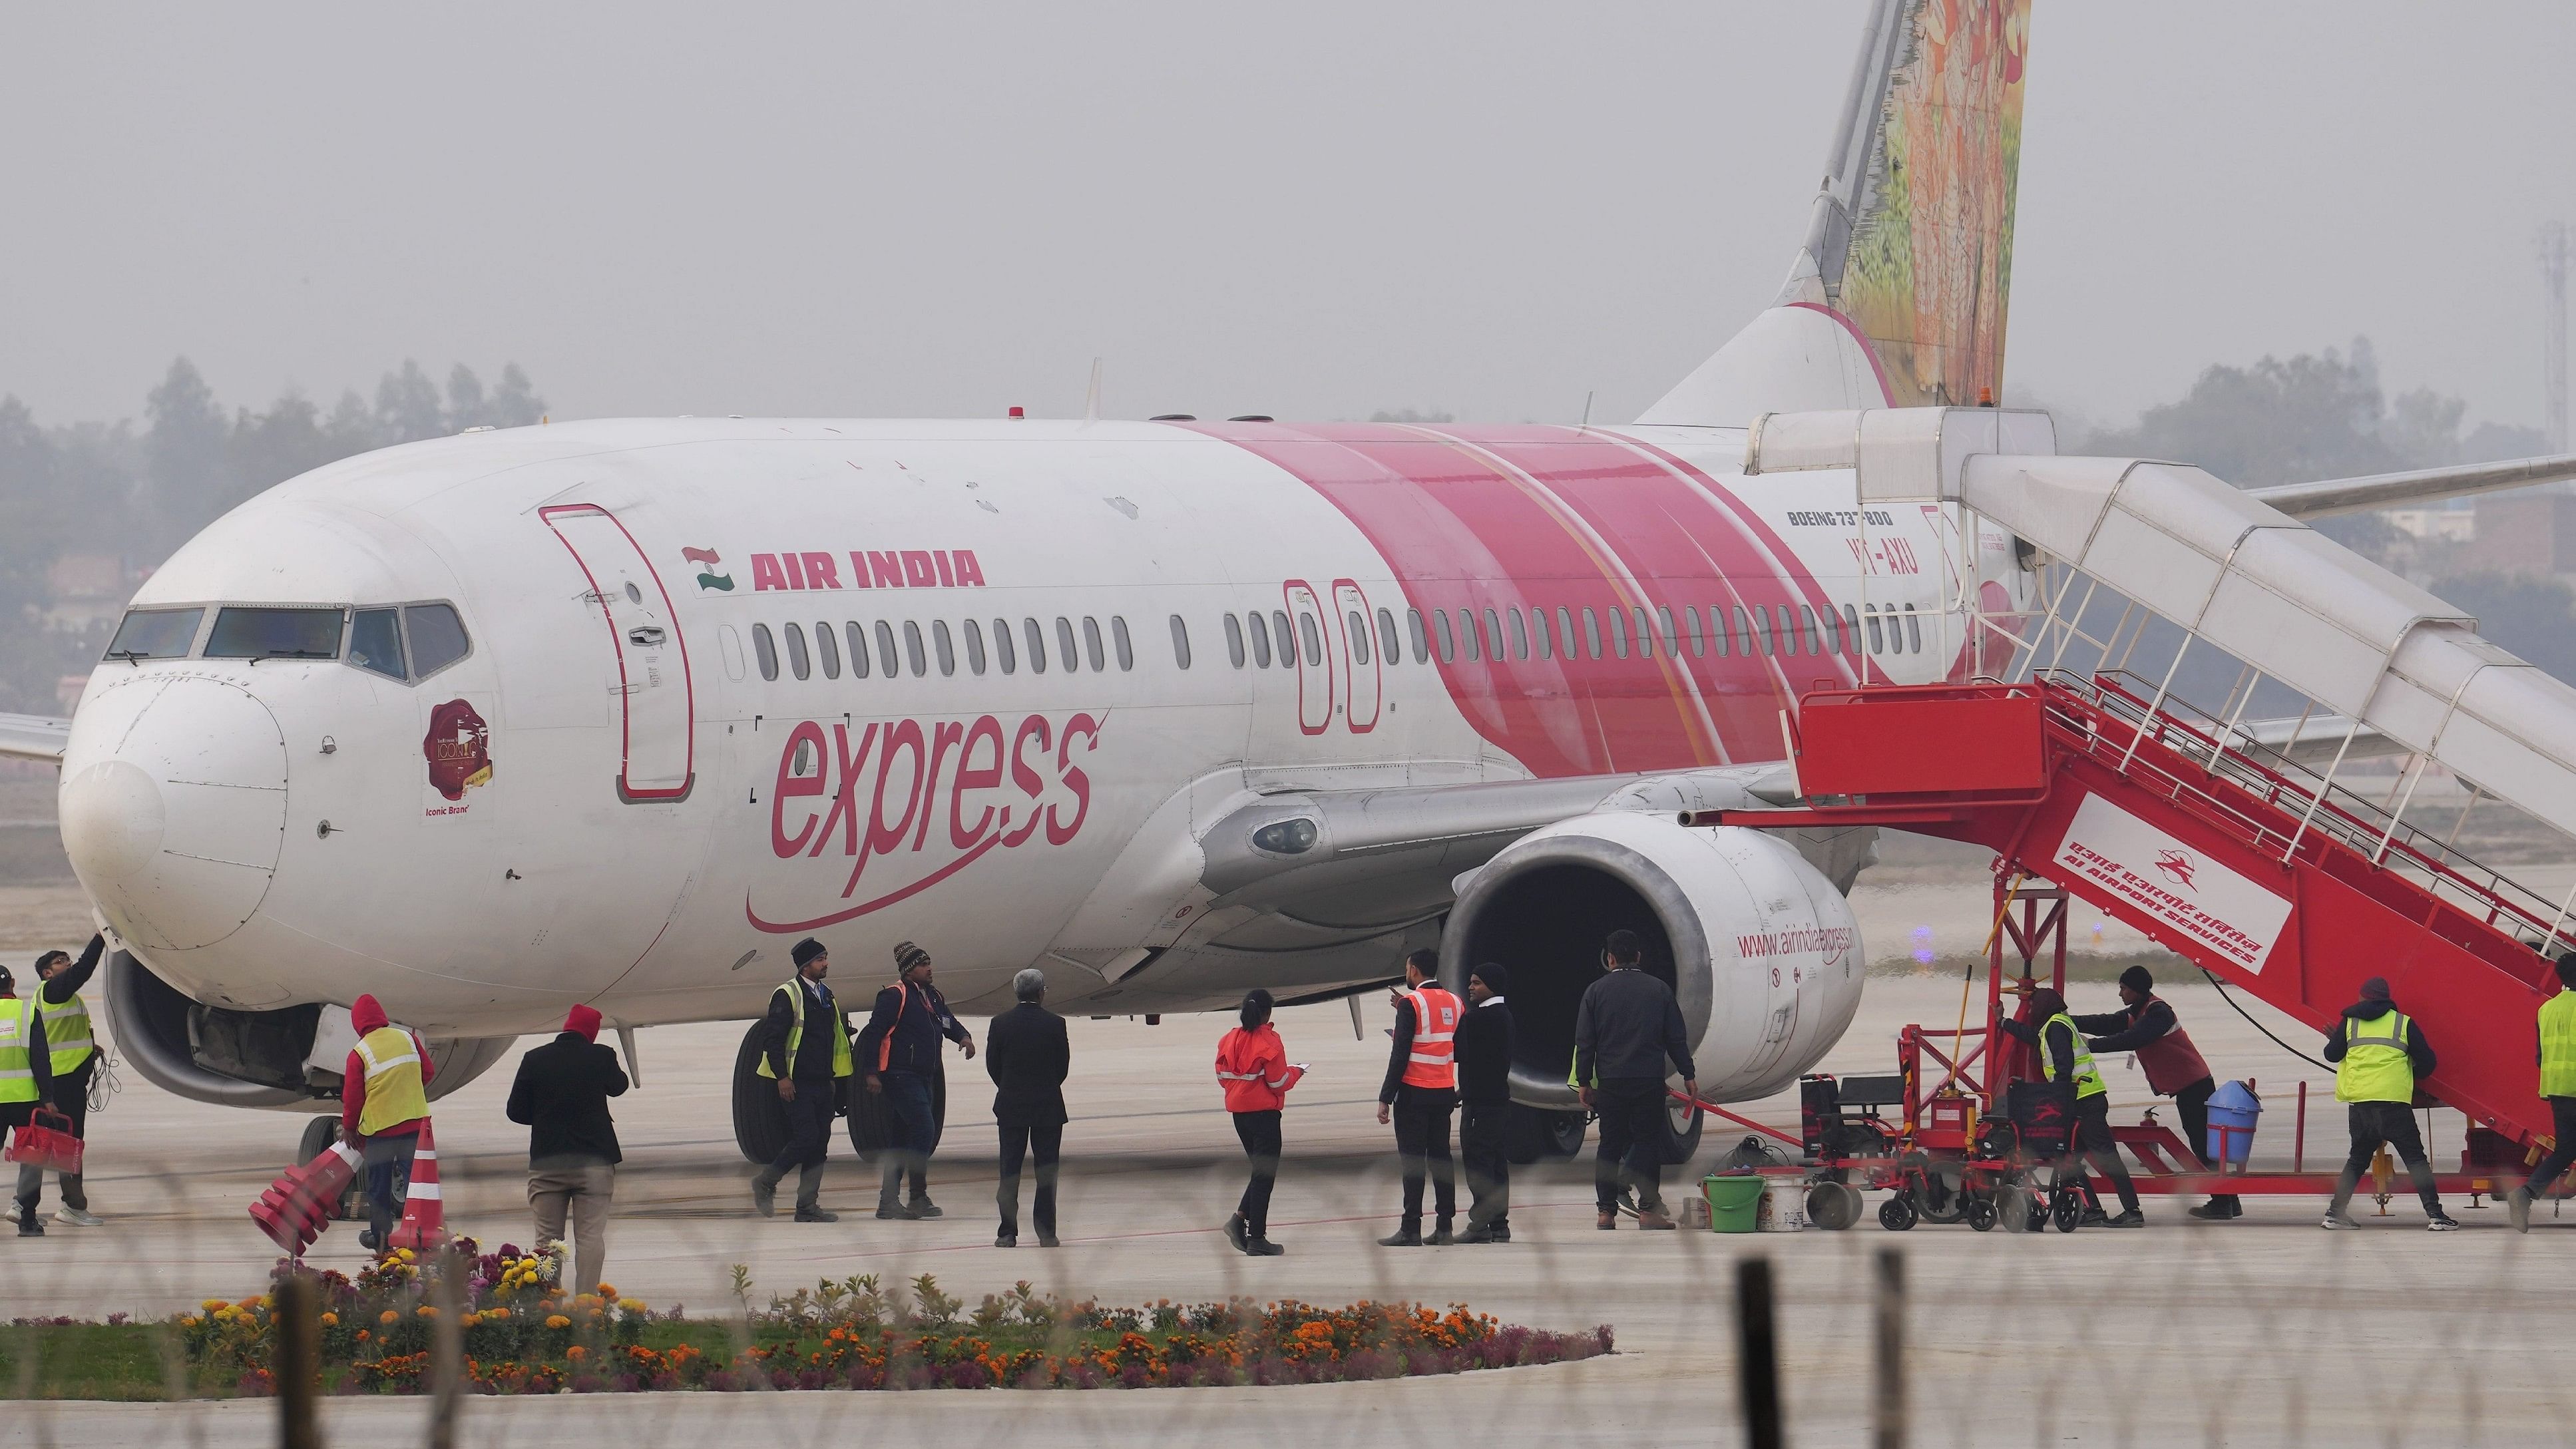 <div class="paragraphs"><p> Representative image showing an Air India Express Flight.</p></div>